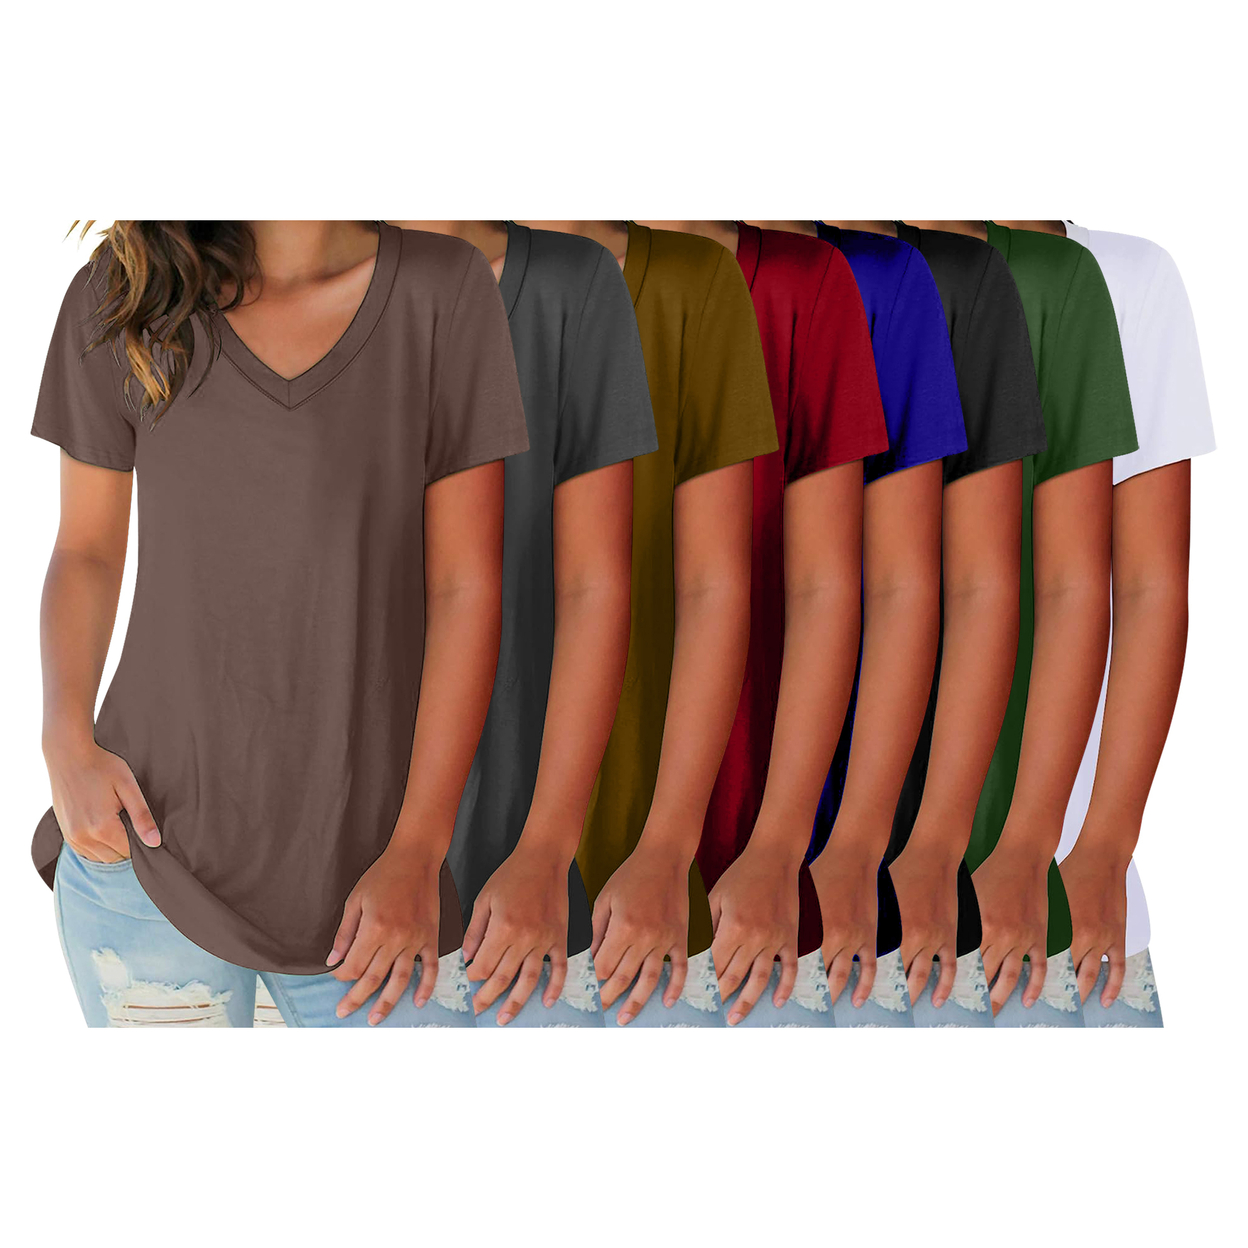 2-Pack: Women's Ultra Soft Smooth Cotton Blend Basic V-Neck Short Sleeve Shirts - Black & Brown, X-large